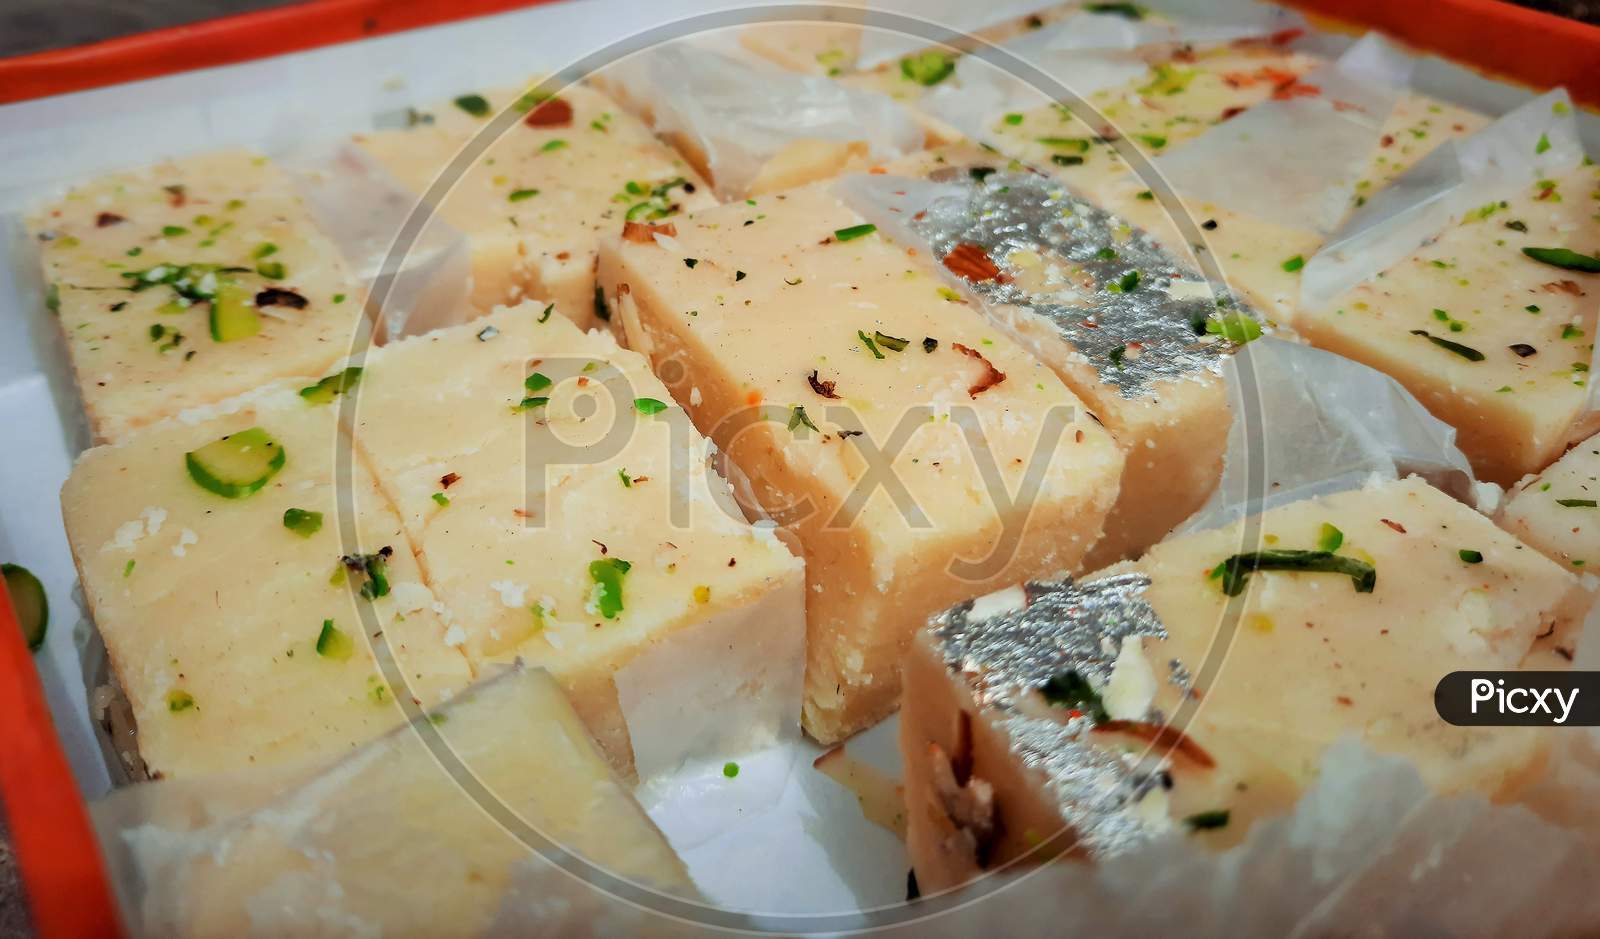 White World Famous Rajasthani Sweets From Jodhpur Closeup